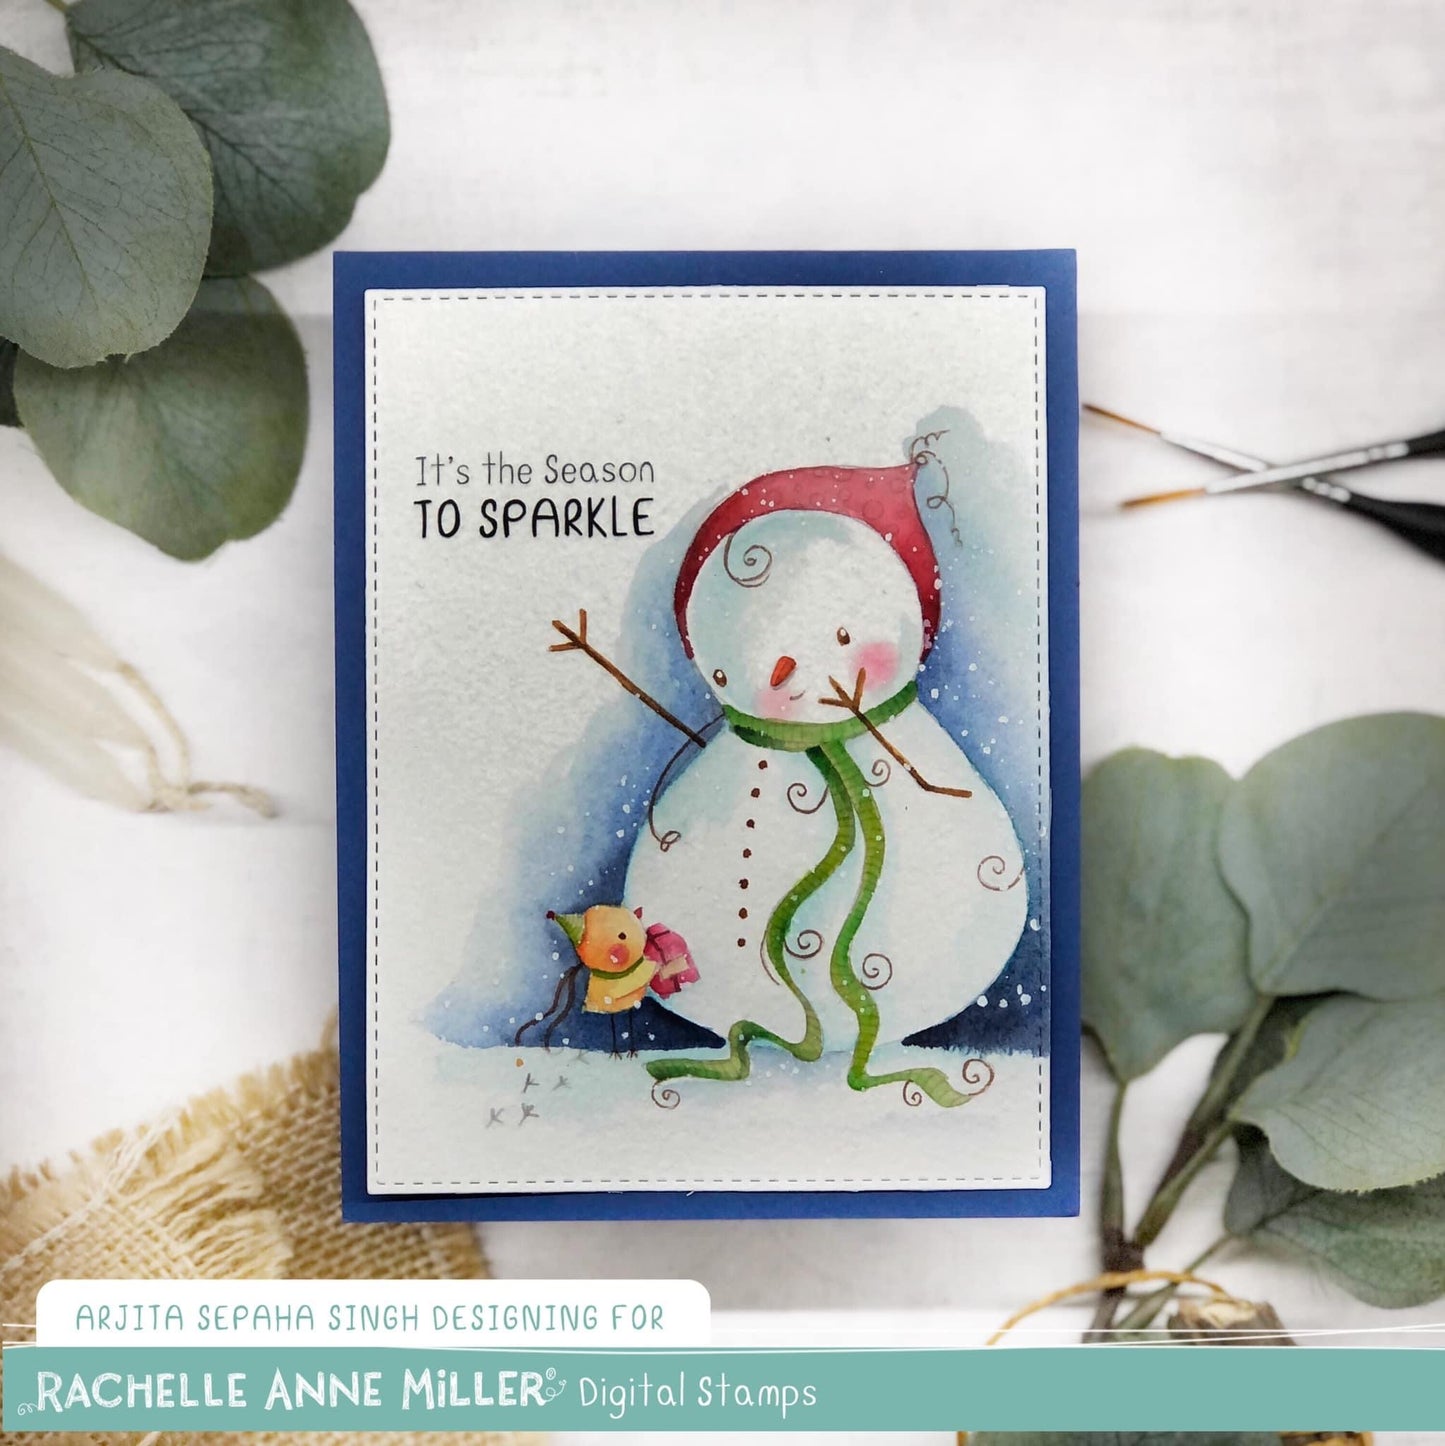 'Snowman's Gift' Digital Stamp